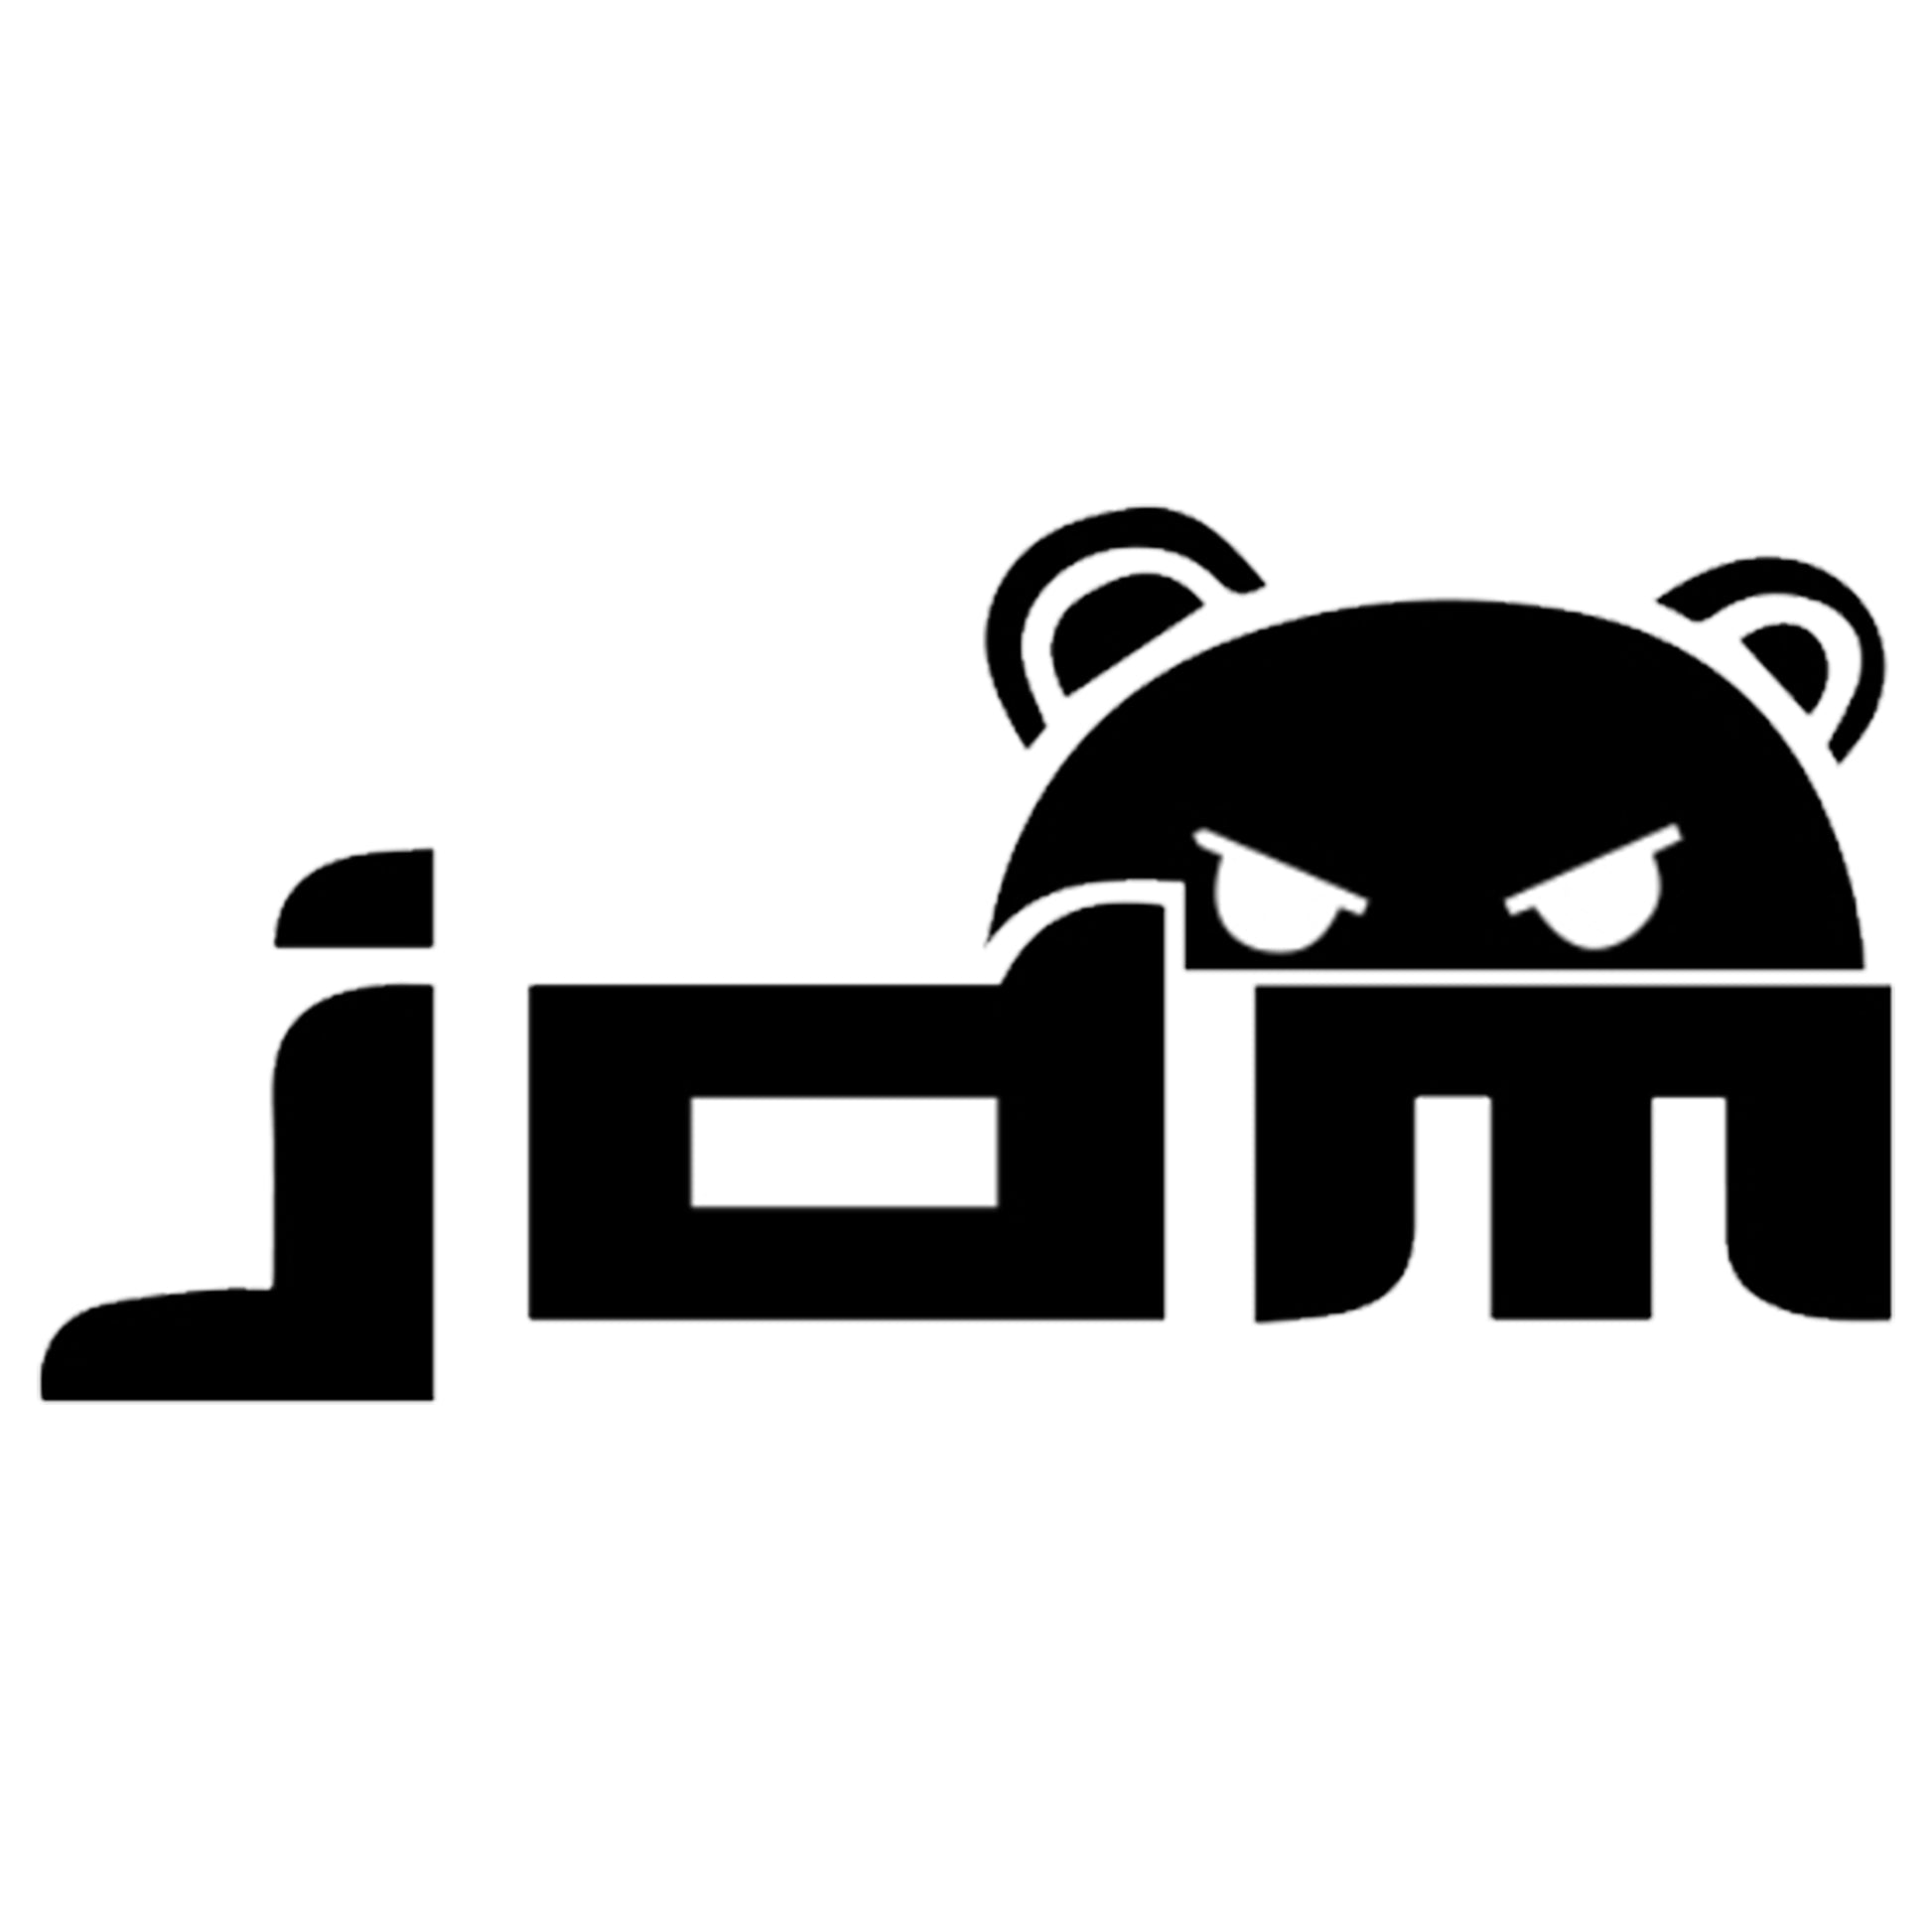 STICKER JDM - Iconic Stickers